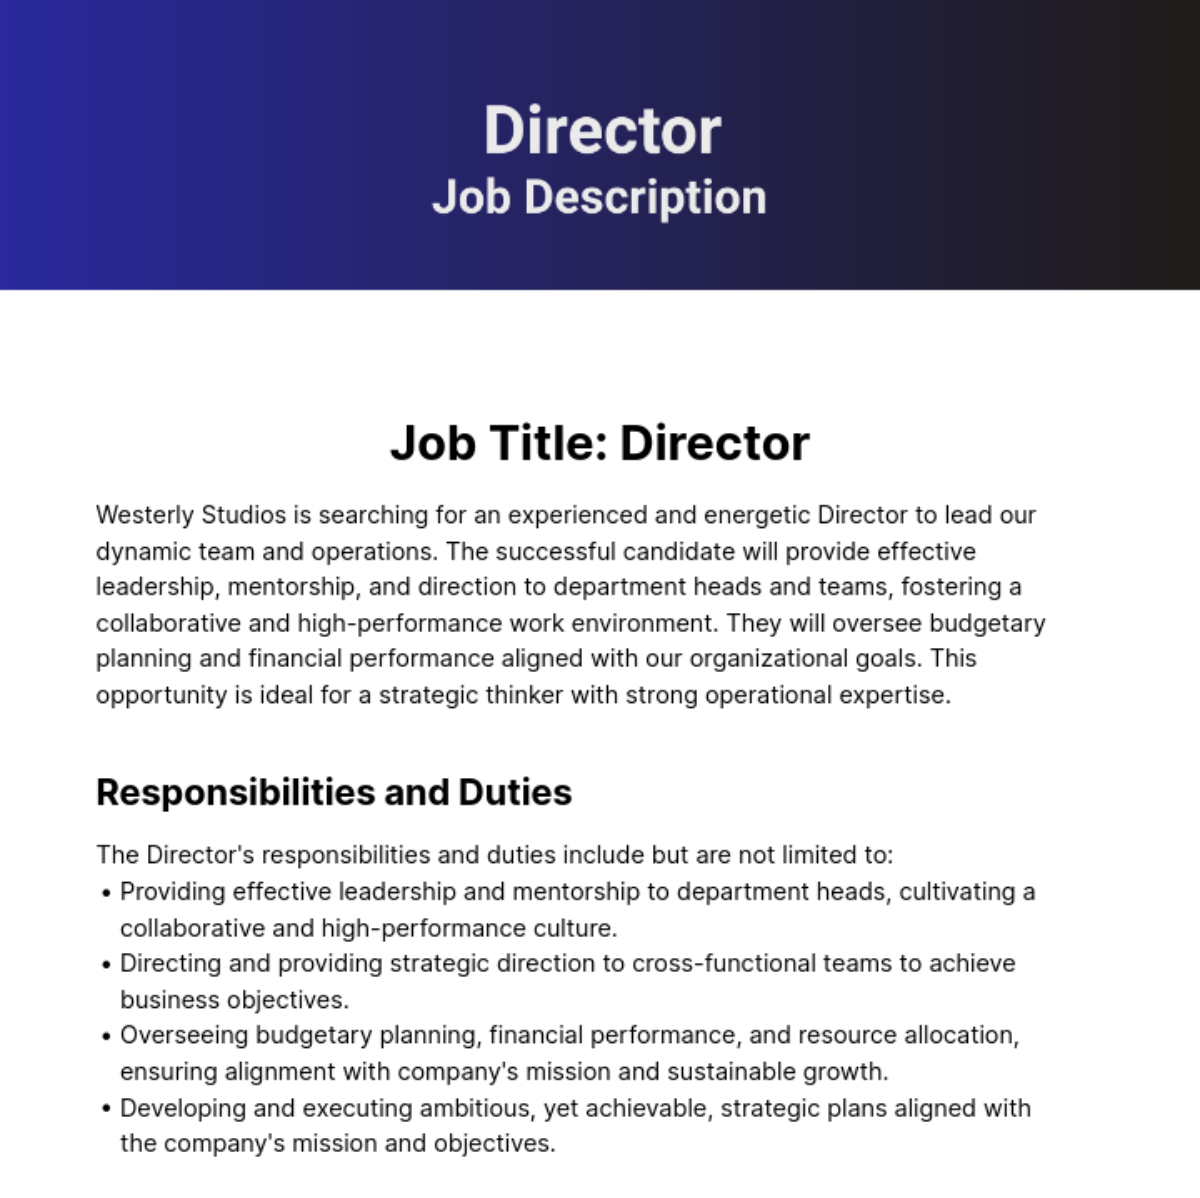 Director Job Description Template